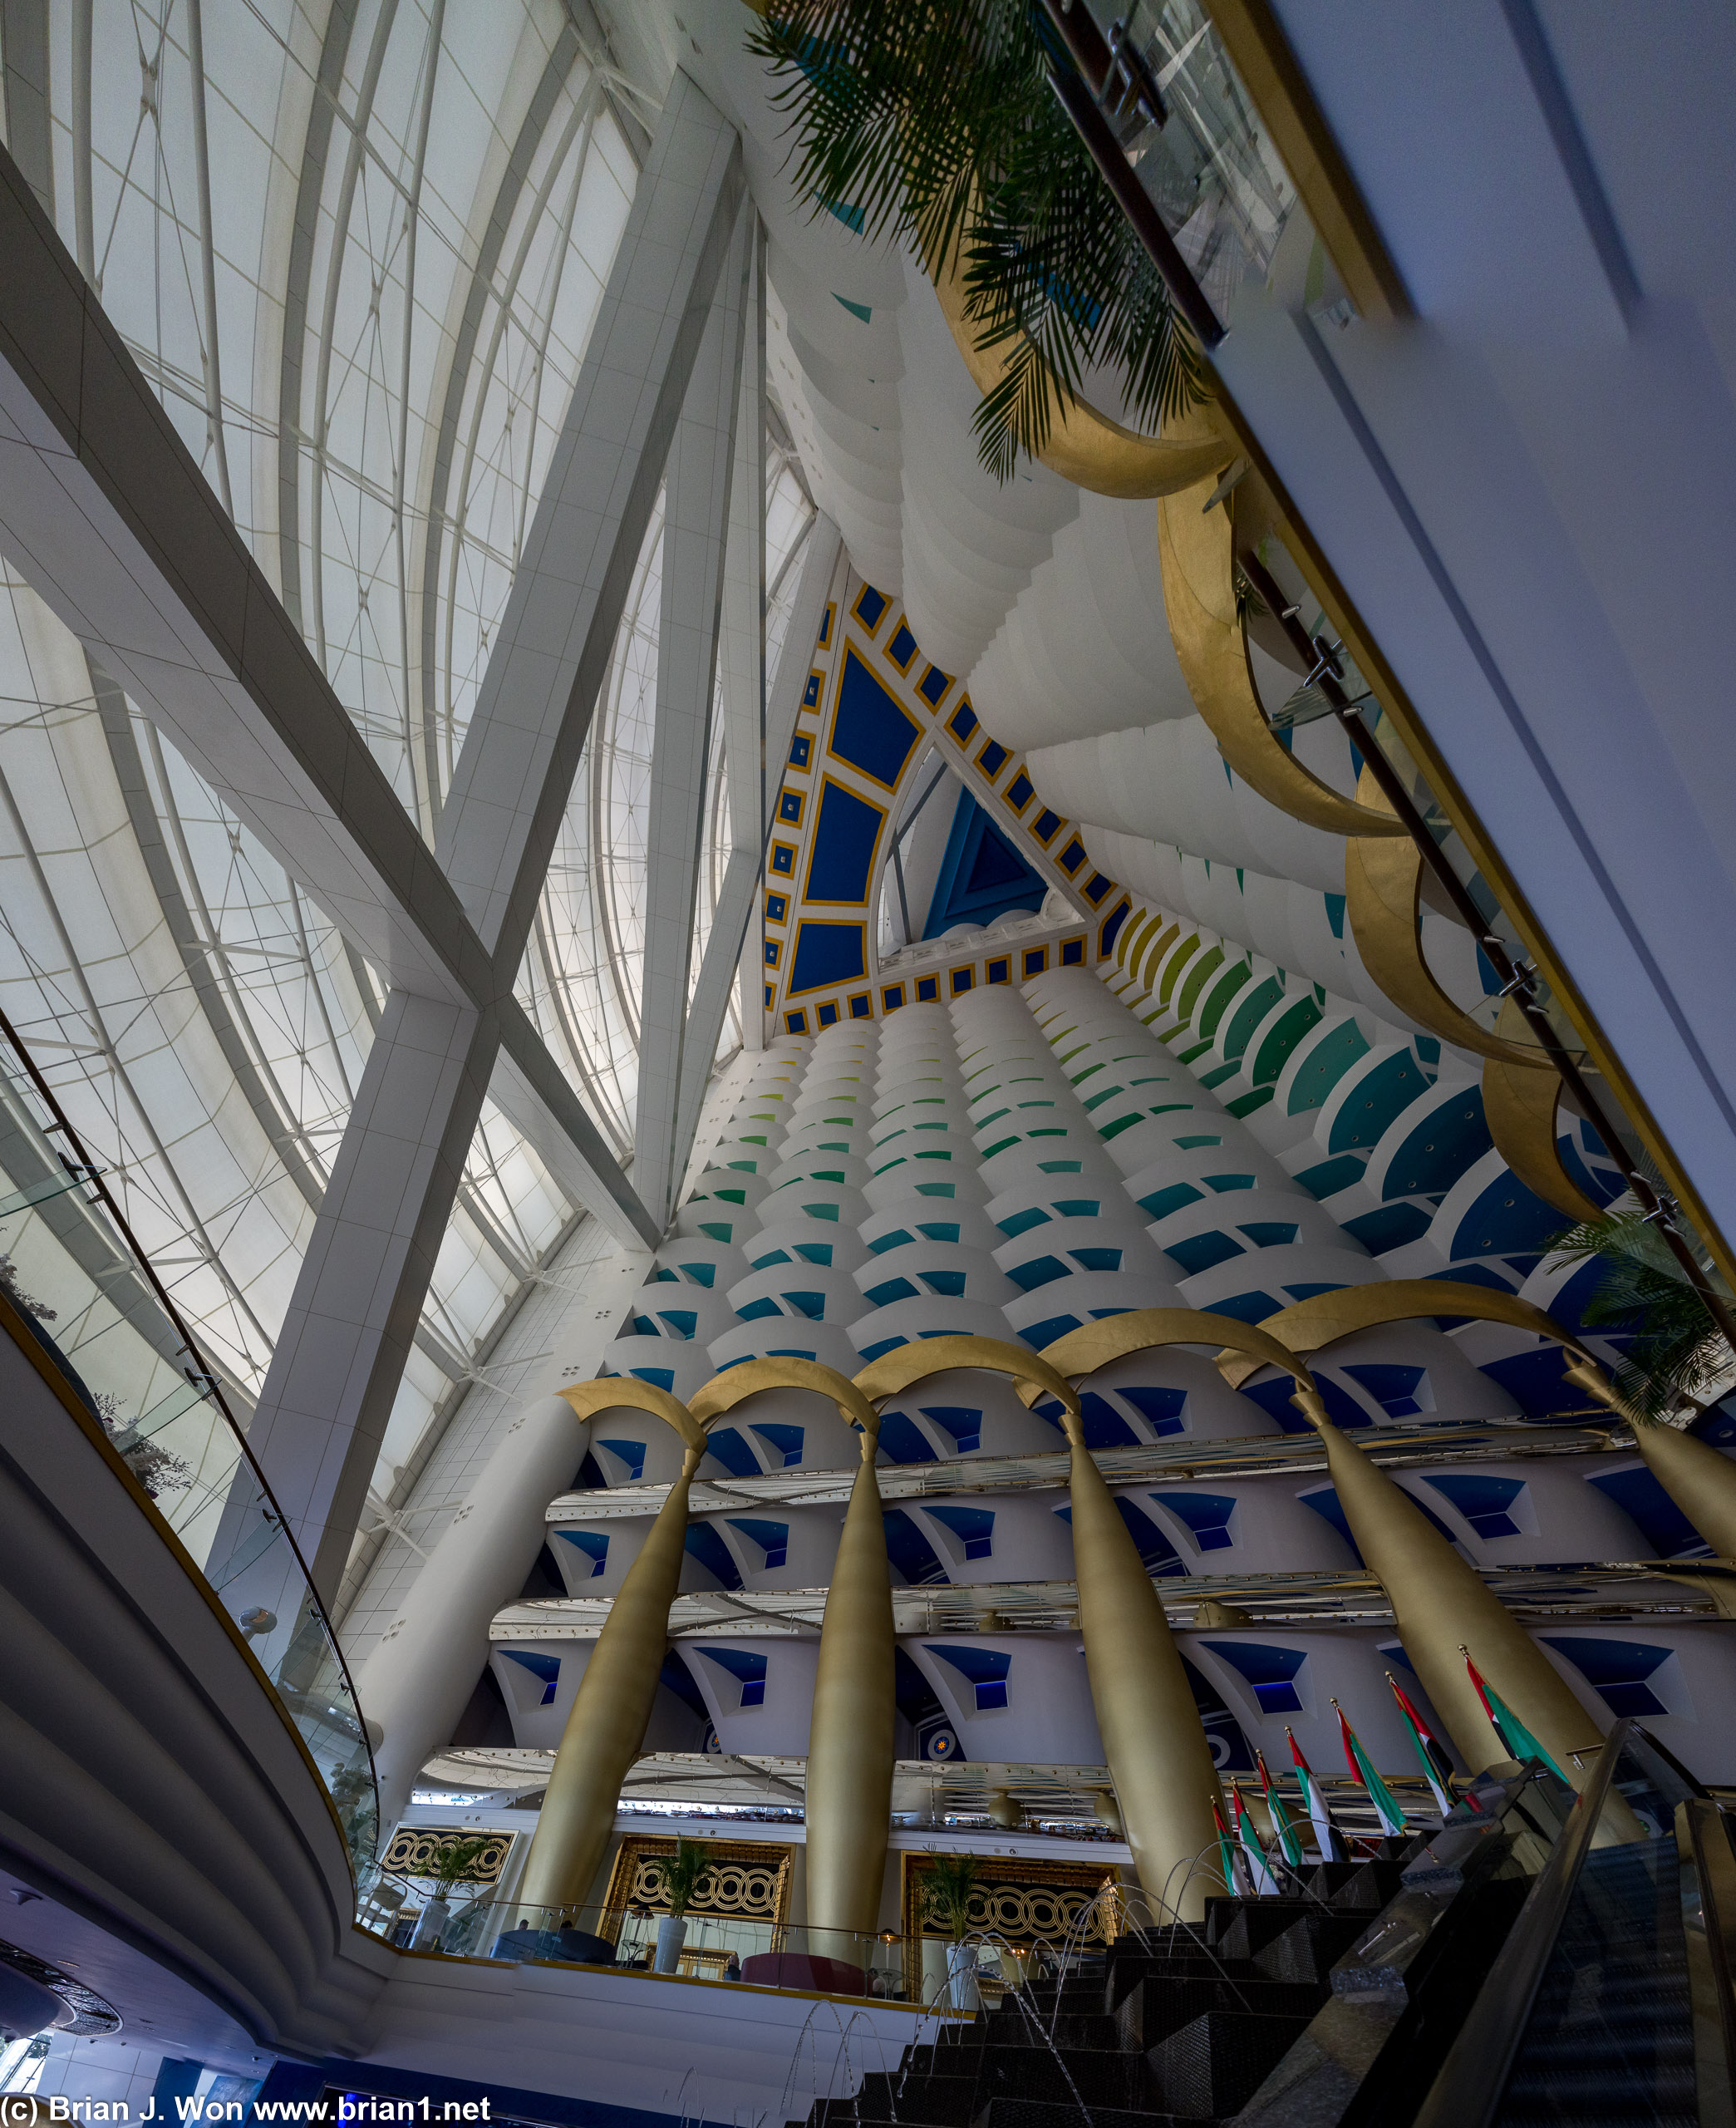 Up the escalator, looking toward the ceiling of the Burj Al Arab.